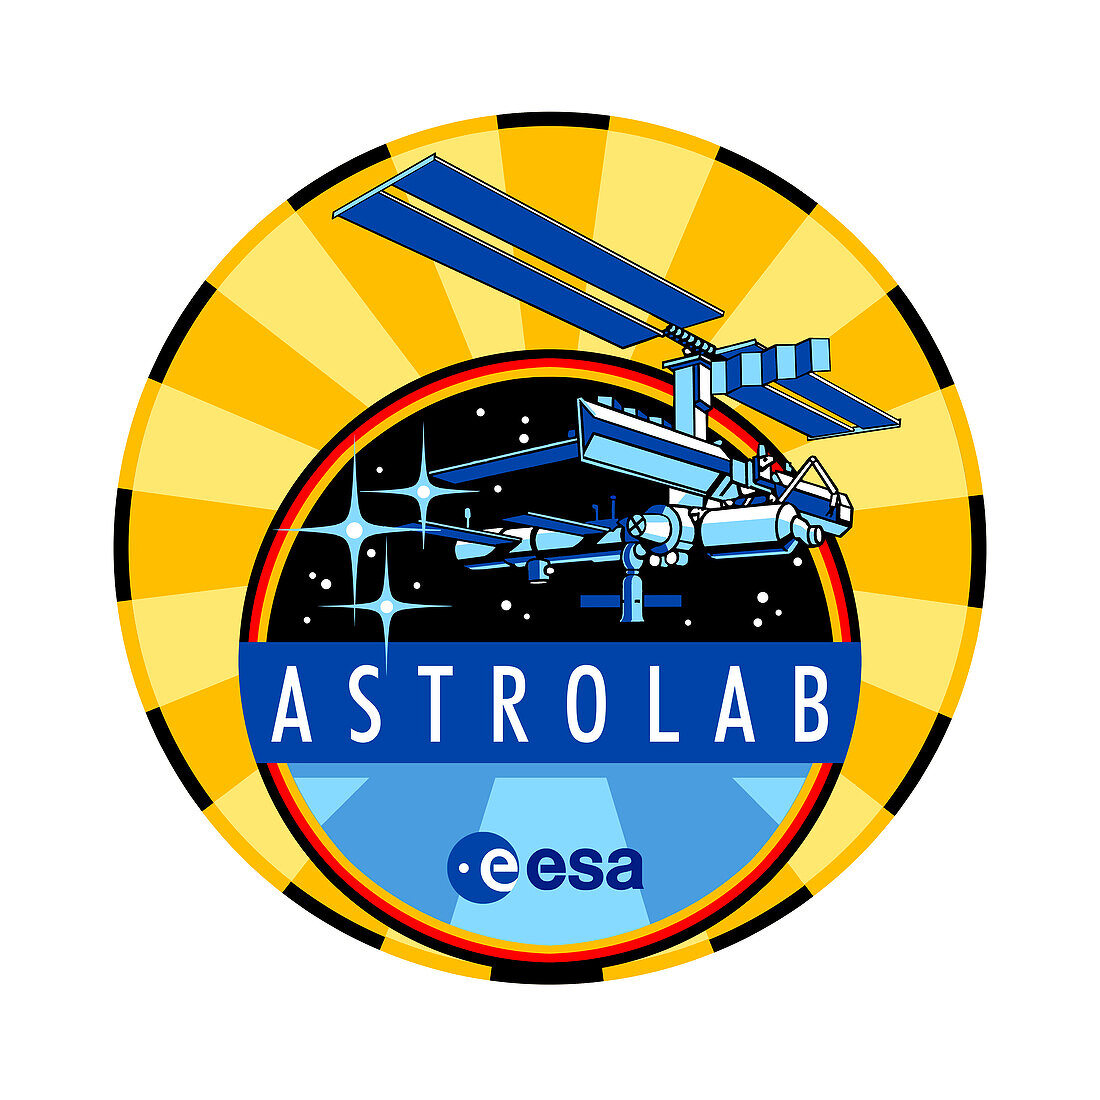 Astrolab mission patch, illustration